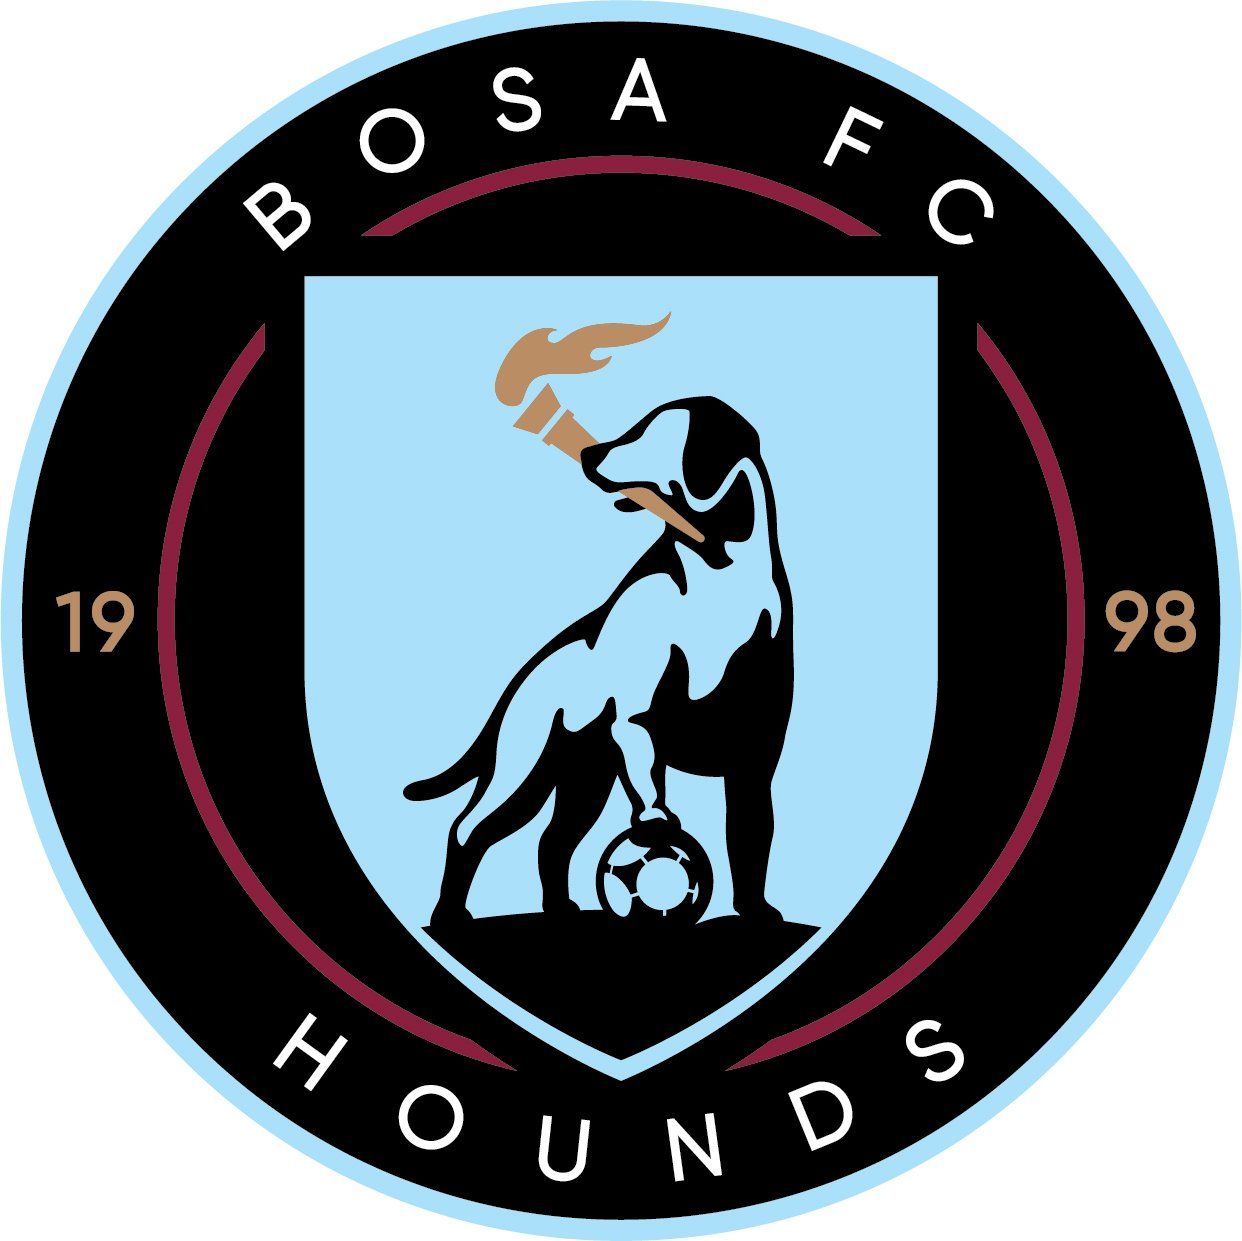 Bosa Football Club